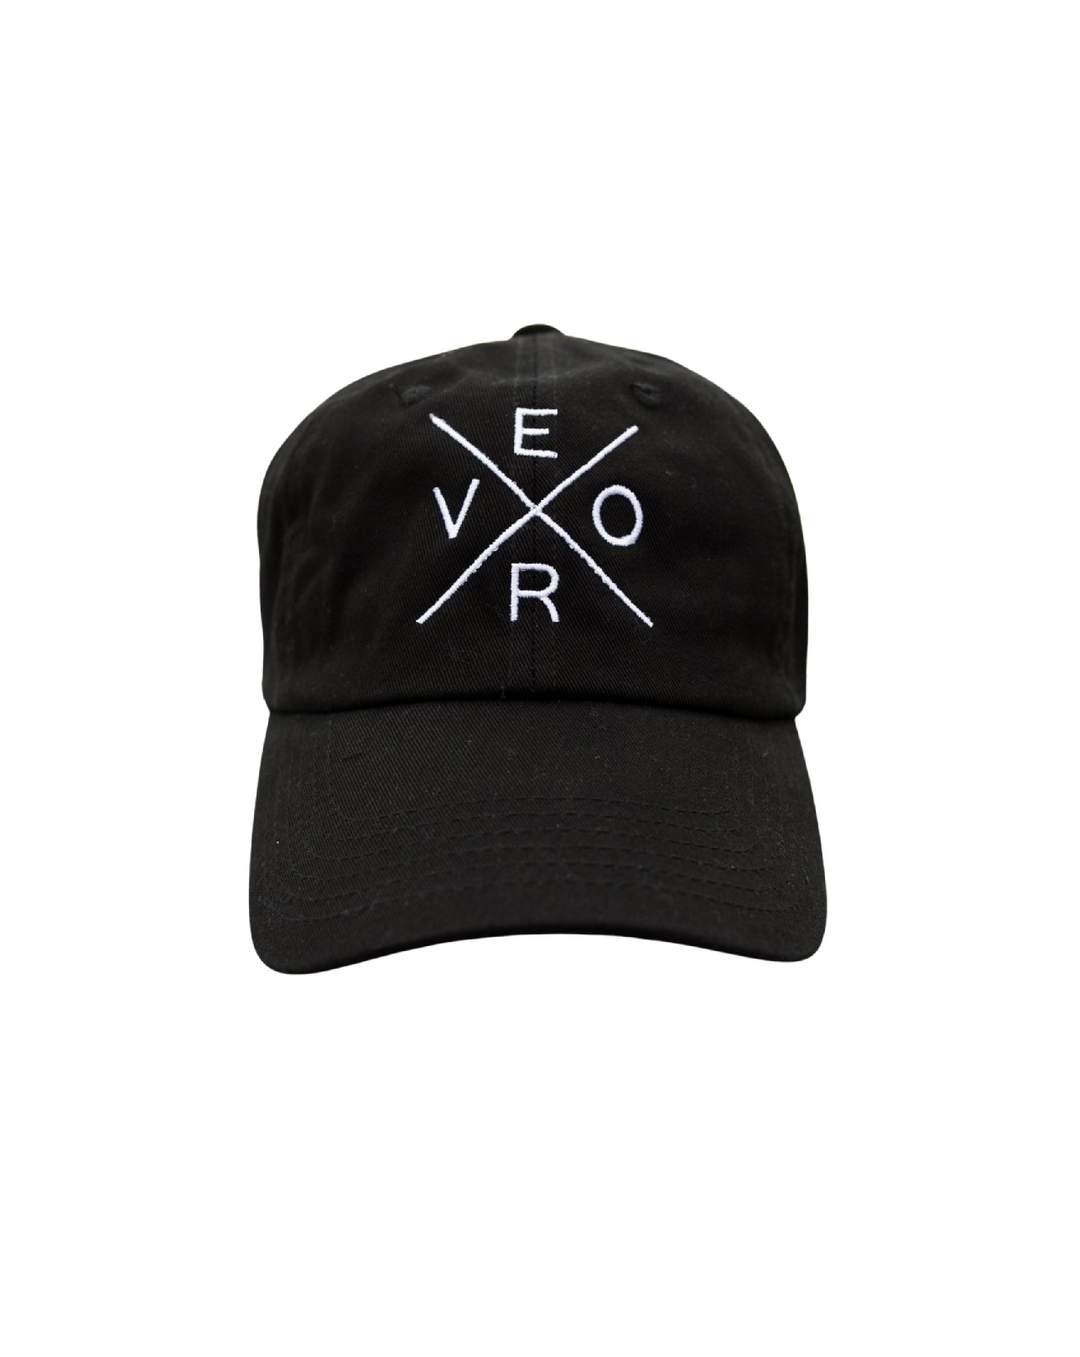 Vero Hat - Black & White